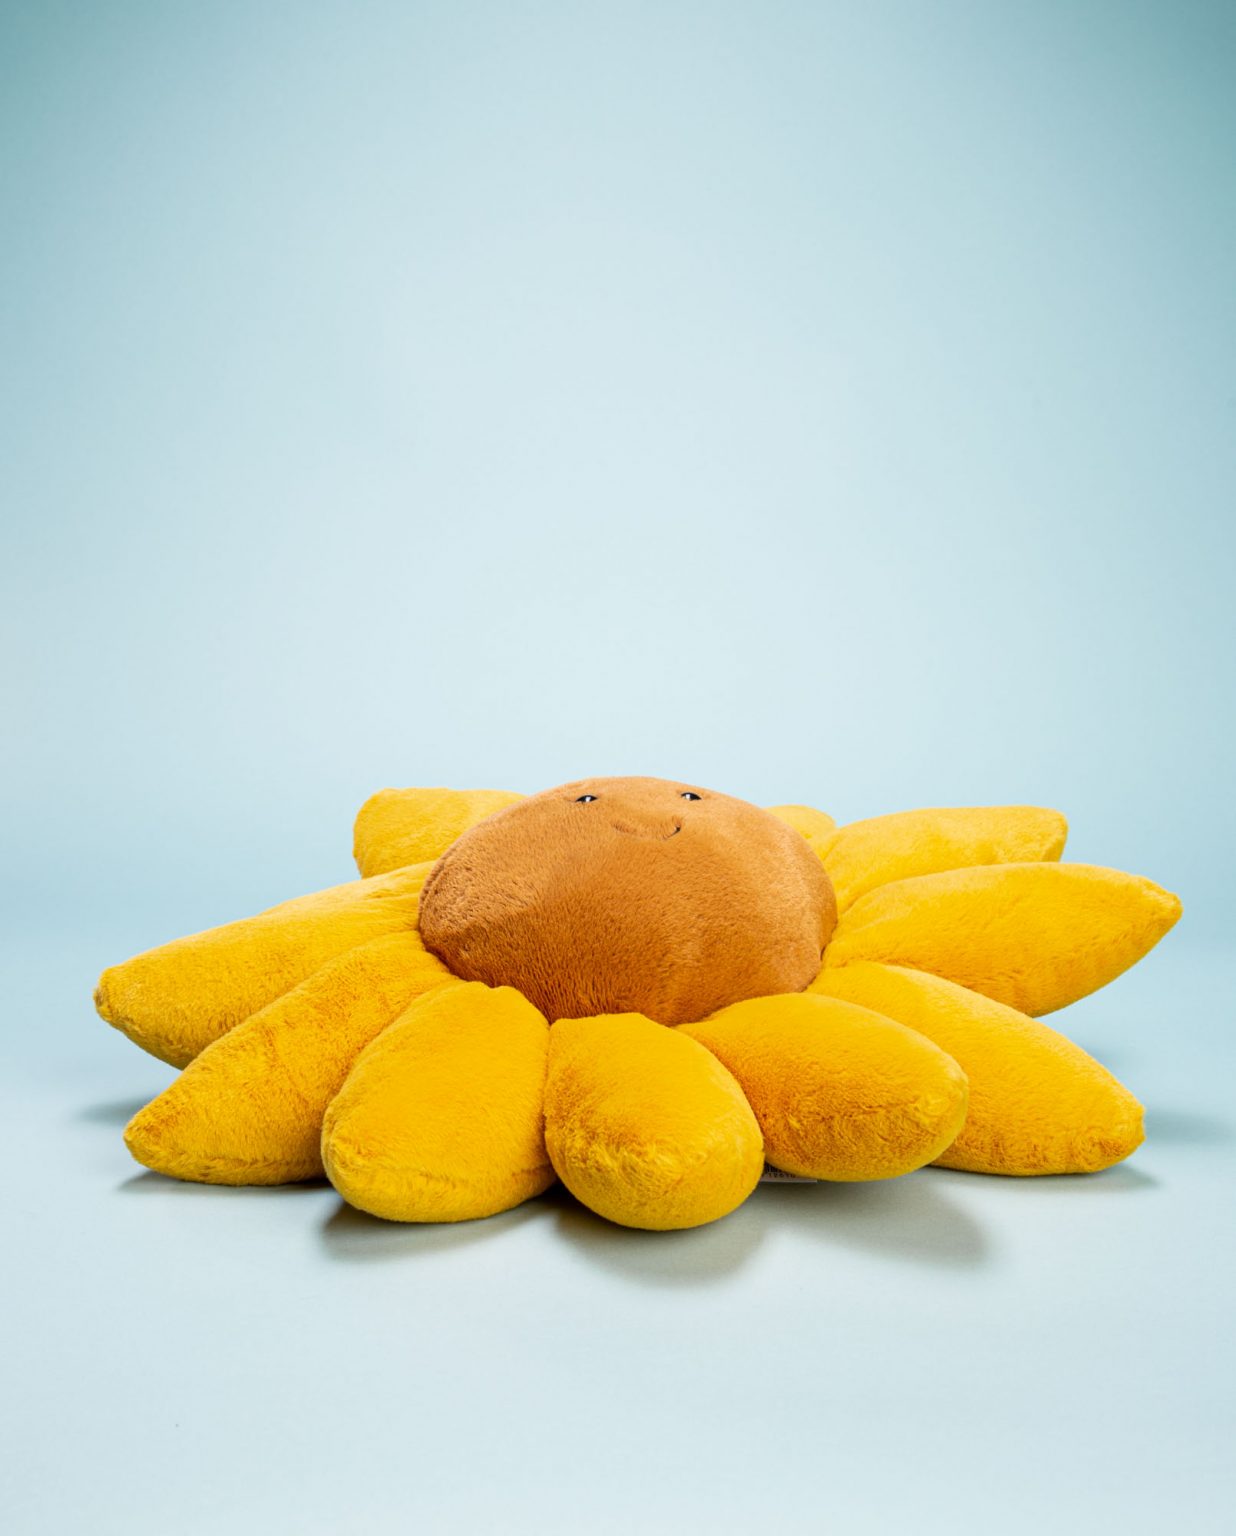 Sunflower soft toy gift - Send a Cuddly